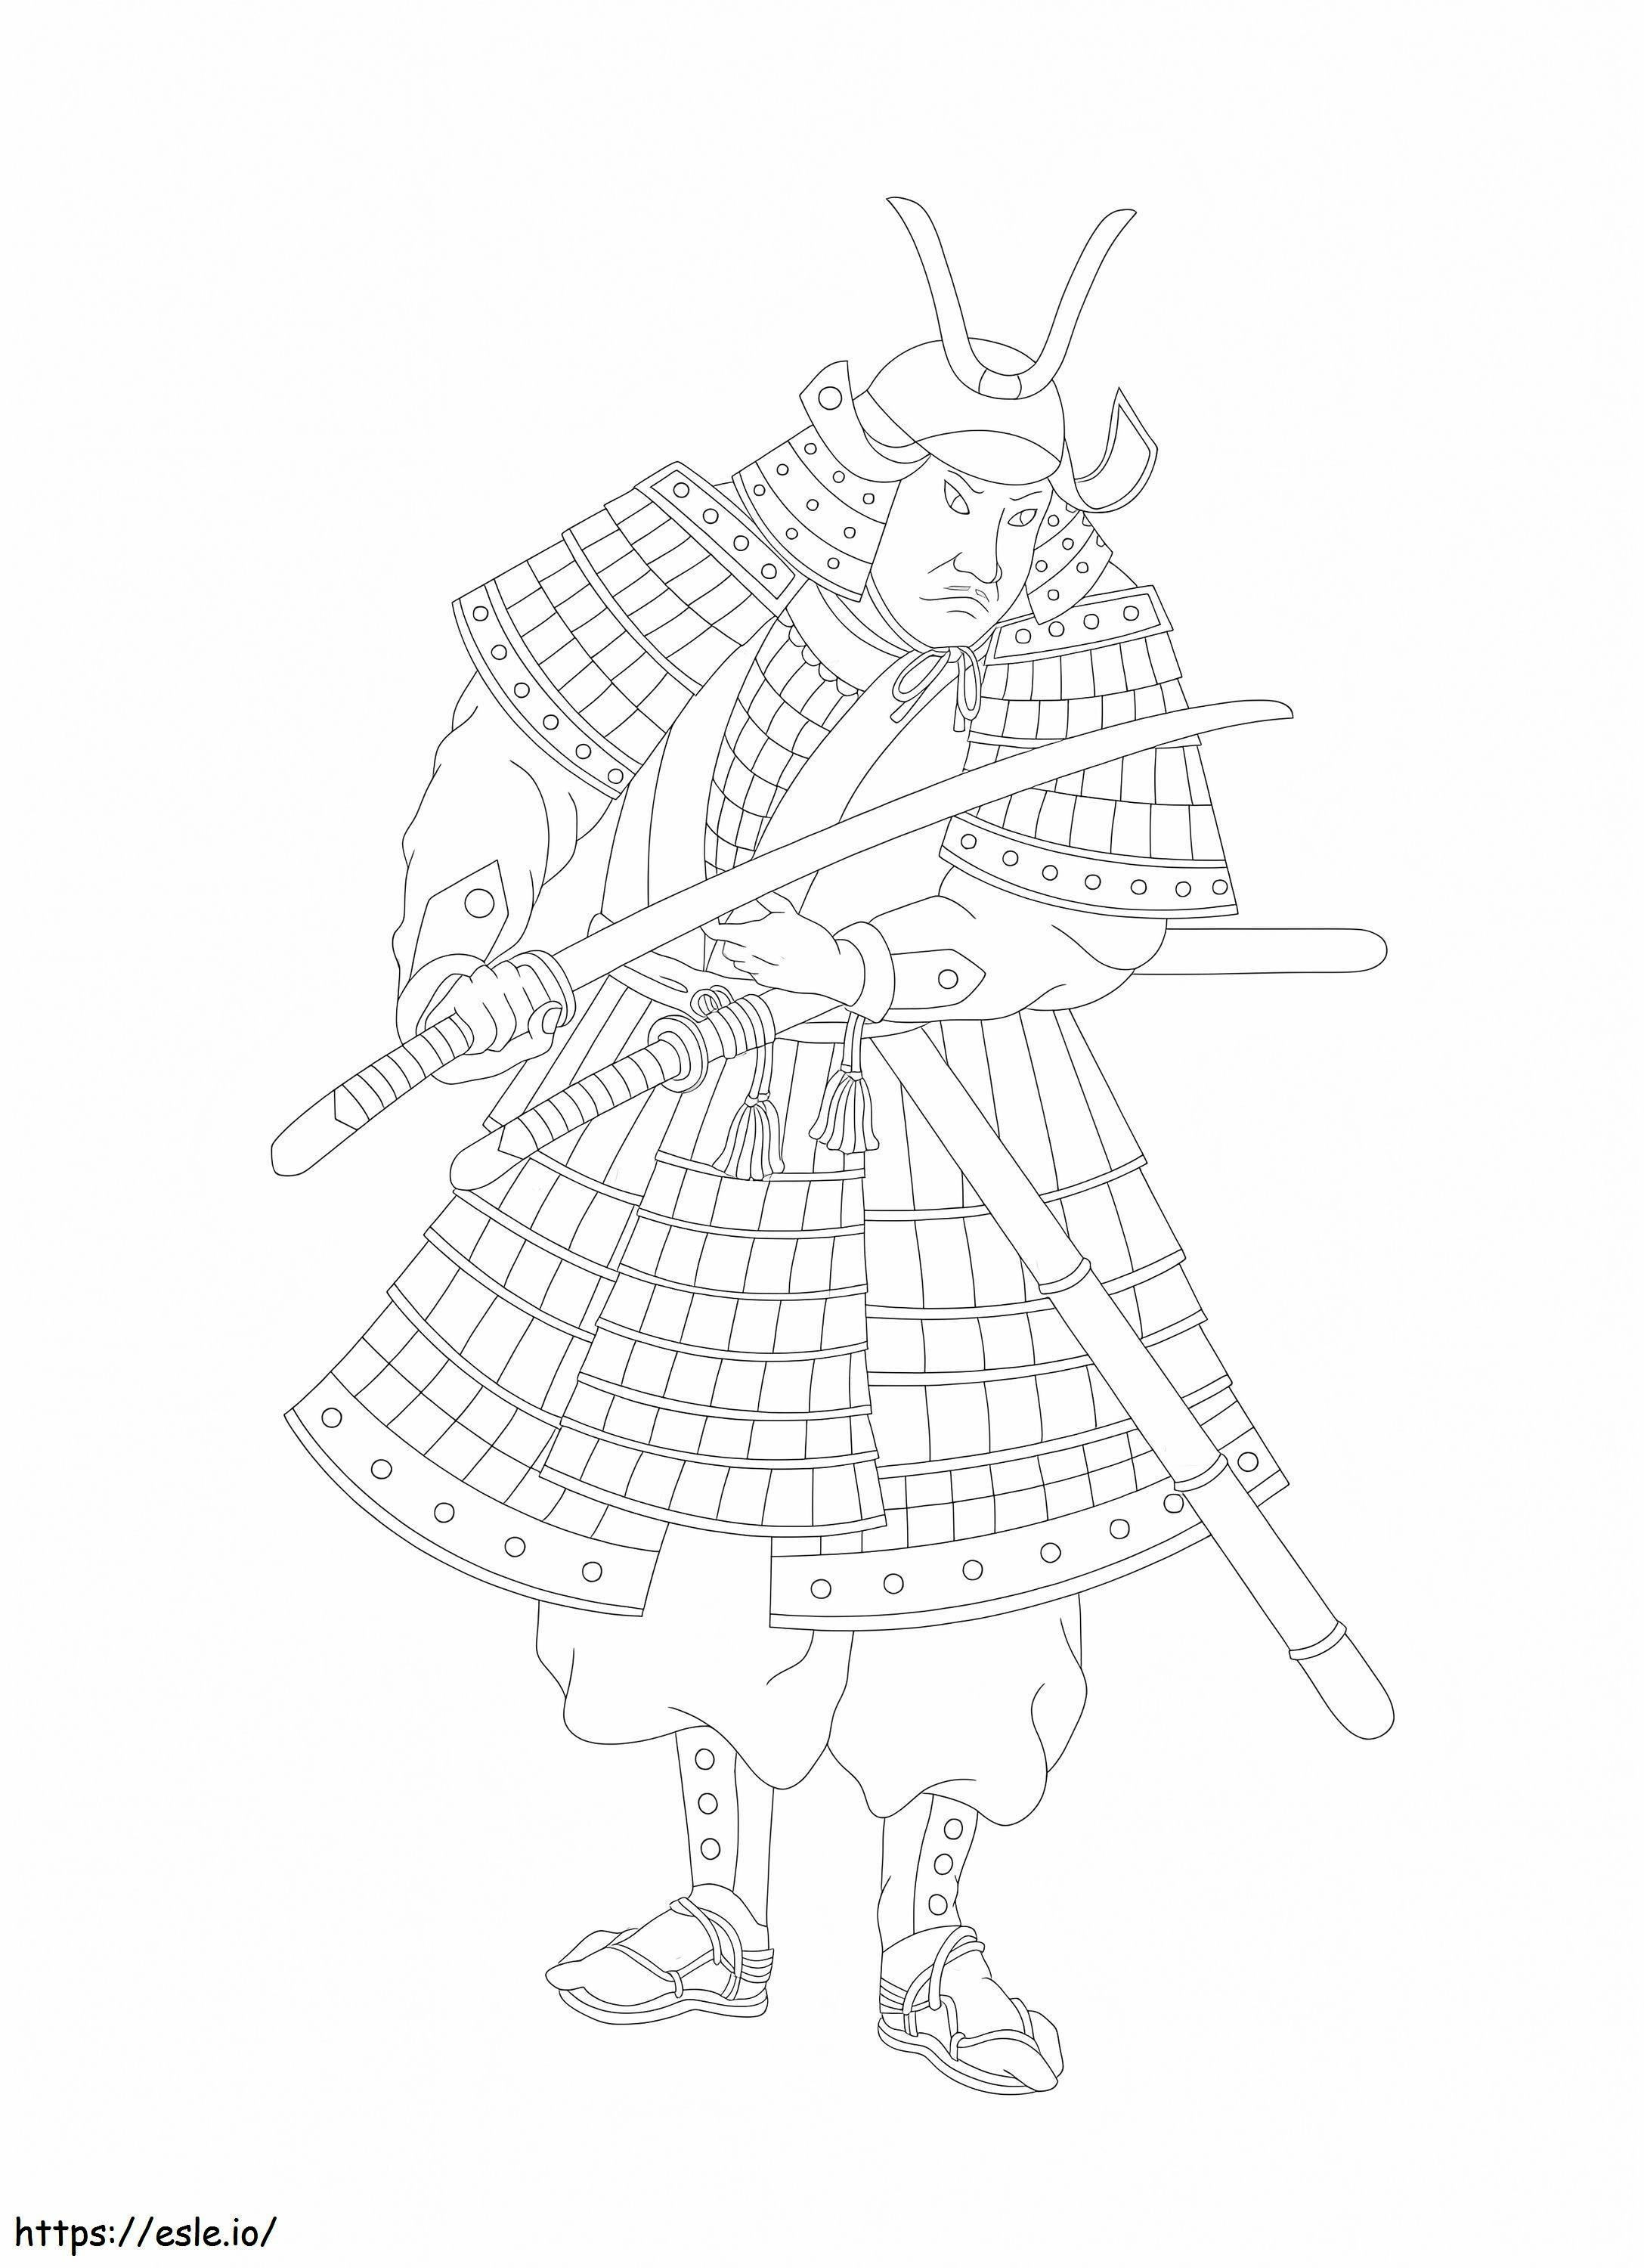 Großer Samurai ausmalbilder